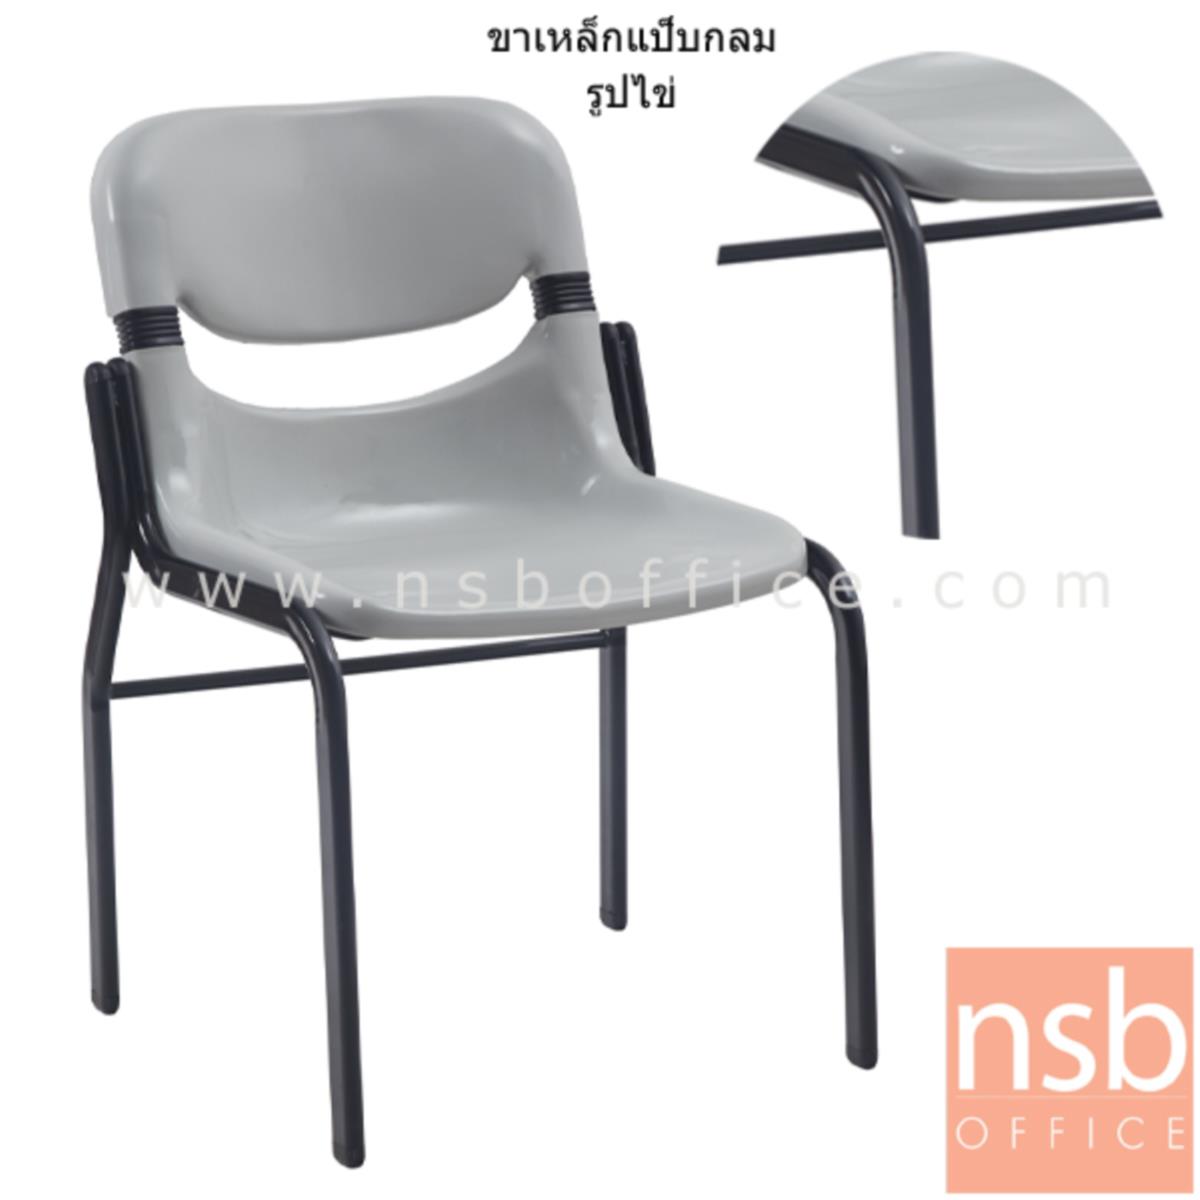 B05A035:เก้าอี้อเนกประสงค์เฟรมโพลี่ รุ่น A790  ขาเหล็ก